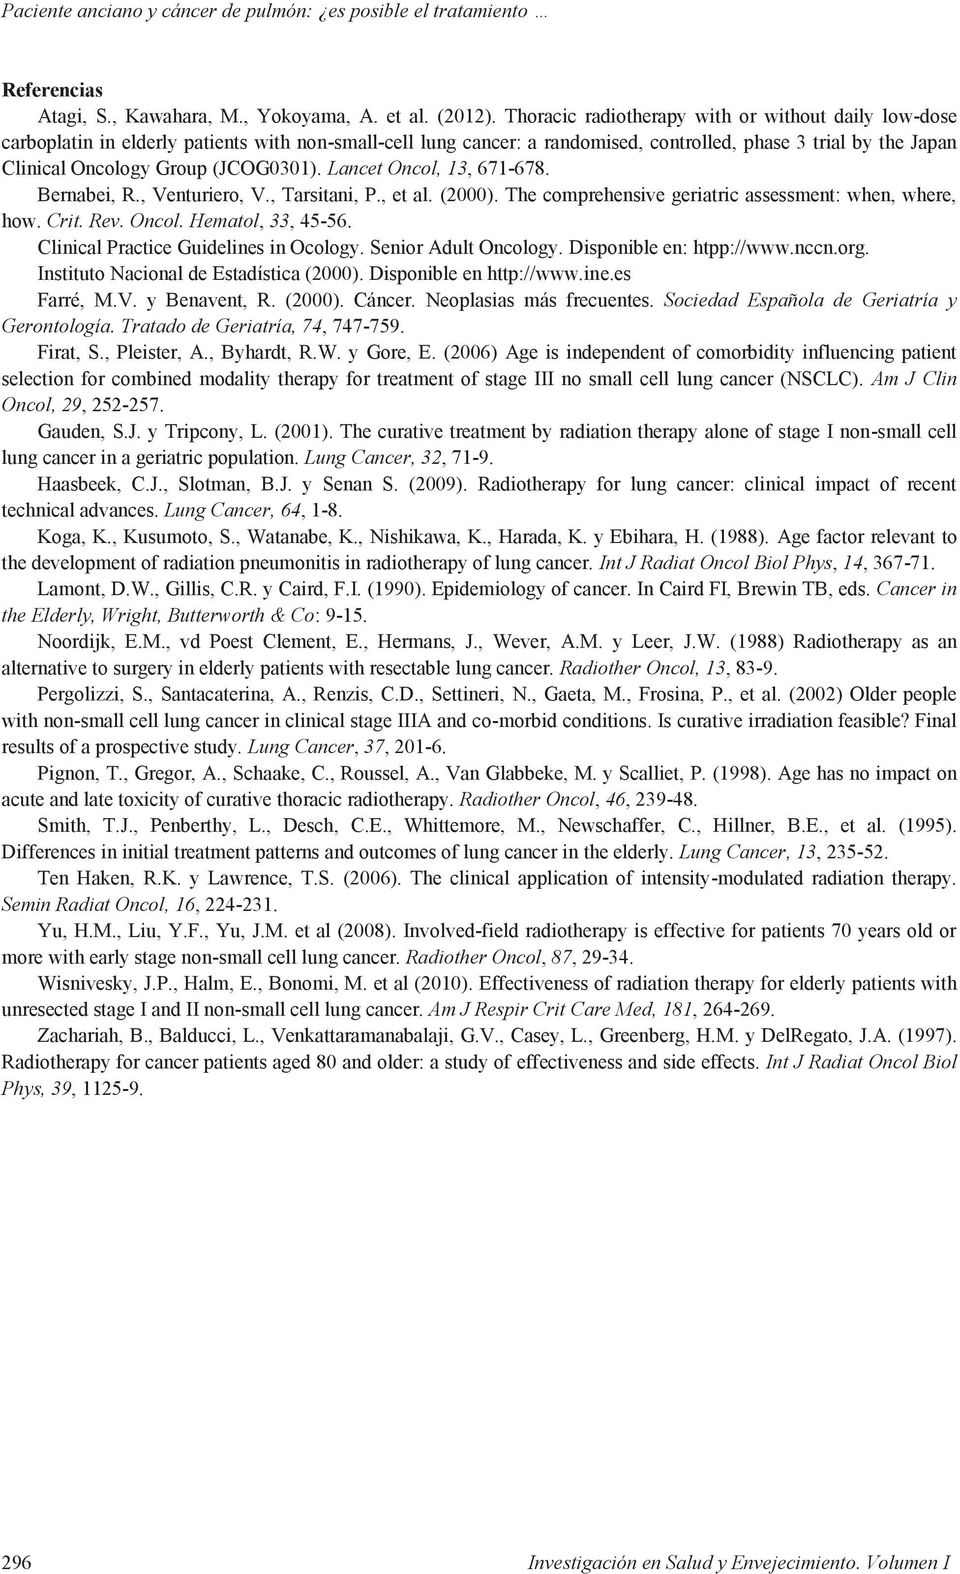 (JCOG0301). Lancet Oncol, 13, 671-678. Bernabei, R., Venturiero, V., Tarsitani, P., et al. (2000). The comprehensive geriatric assessment: when, where, how. Crit. Rev. Oncol. Hematol, 33, 45-56.